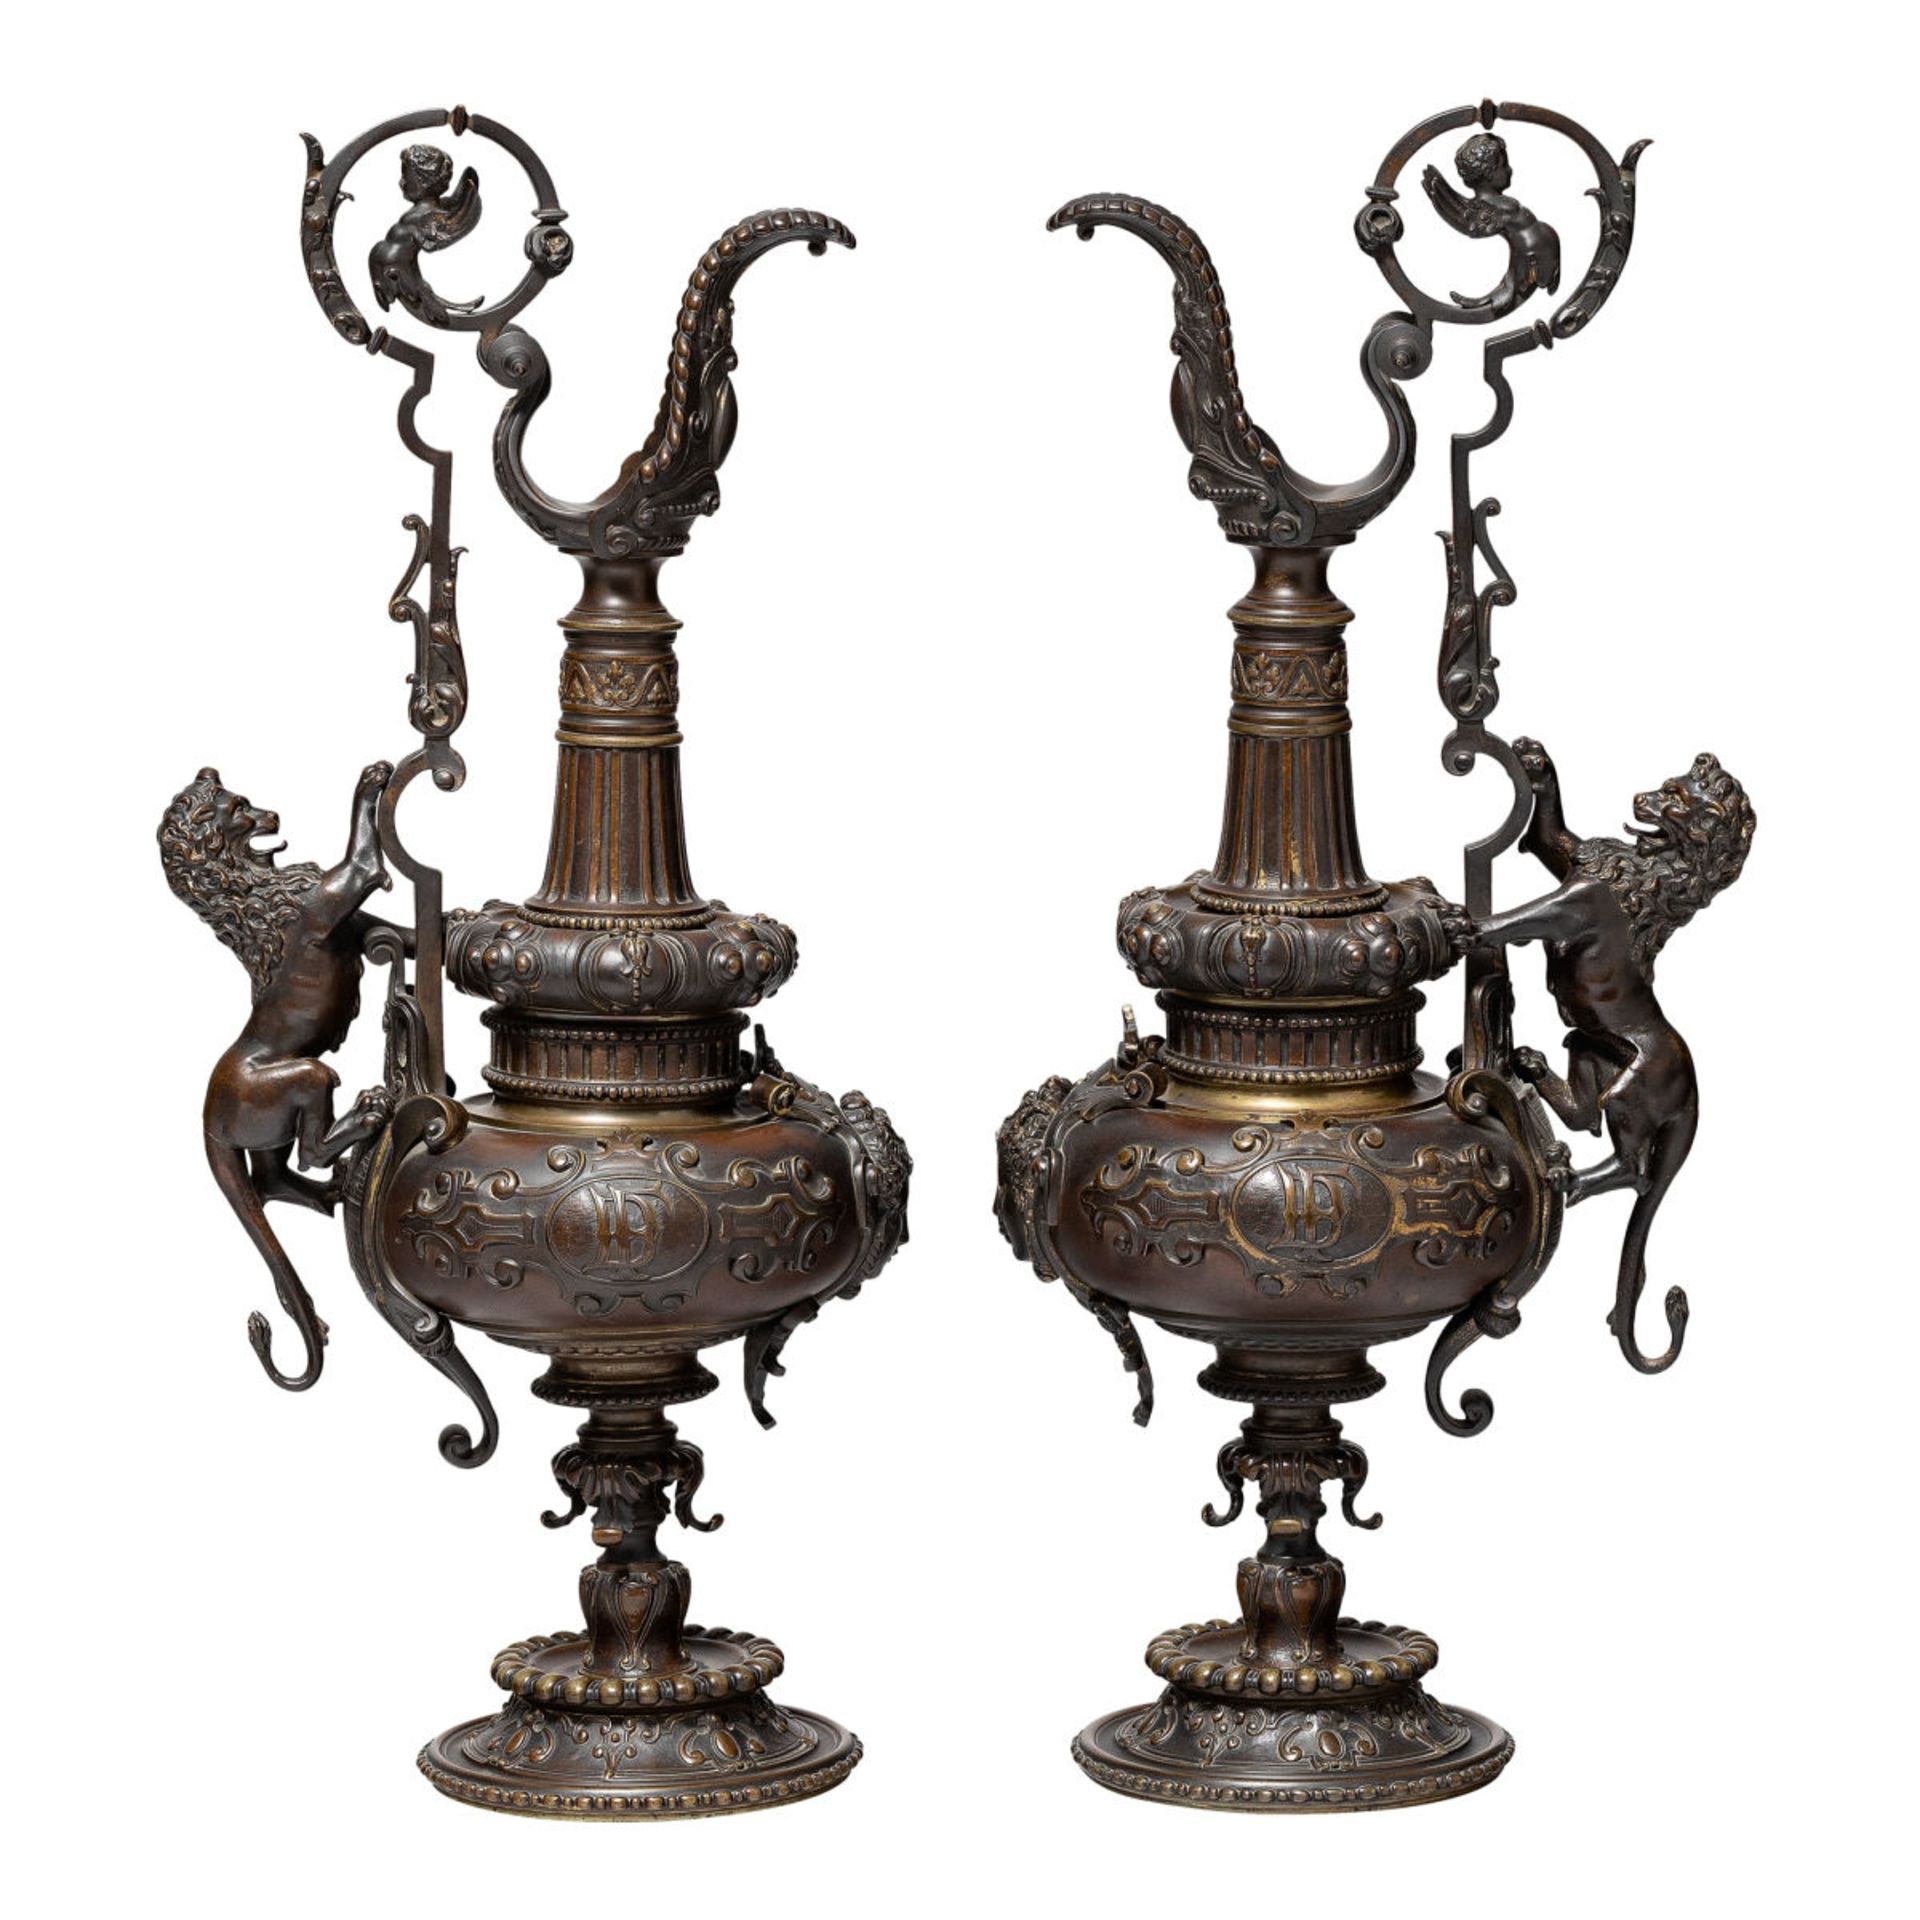 Pair of Historism decorative jugs with ascending lions